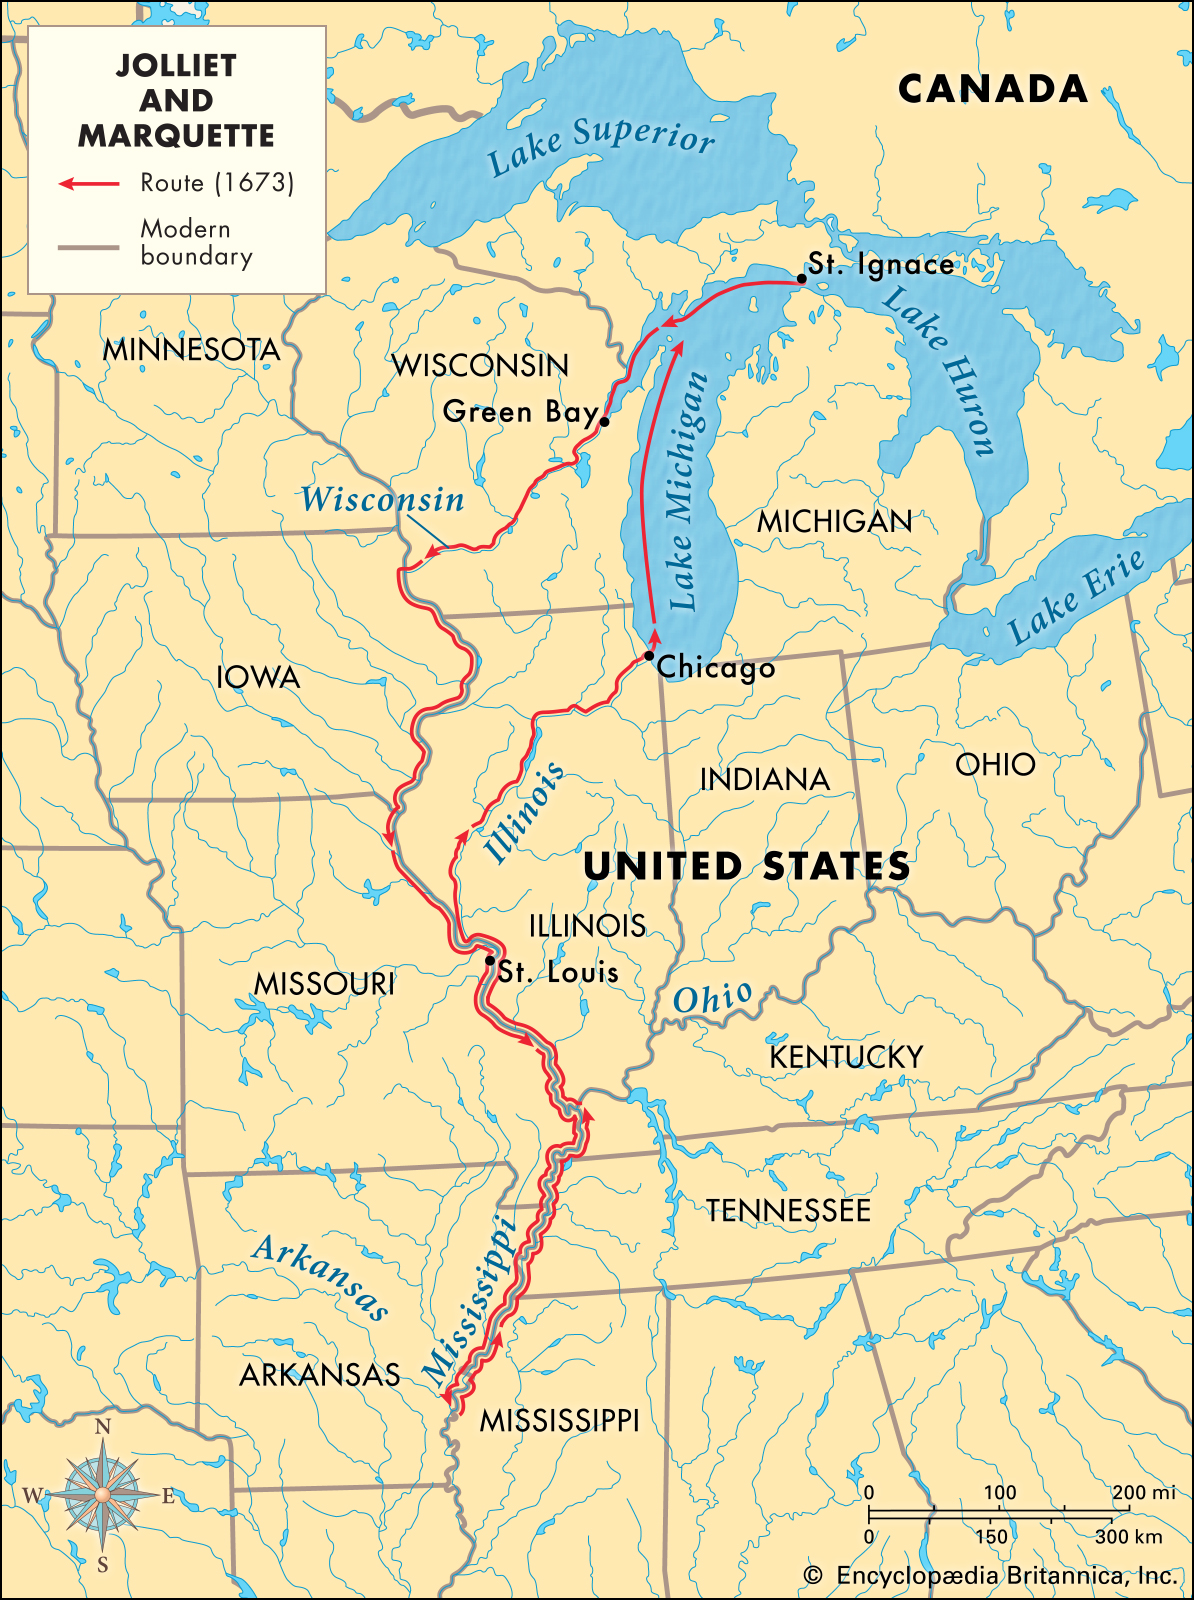 Marquette route map, courtesy of Encyclopedia Britannica.